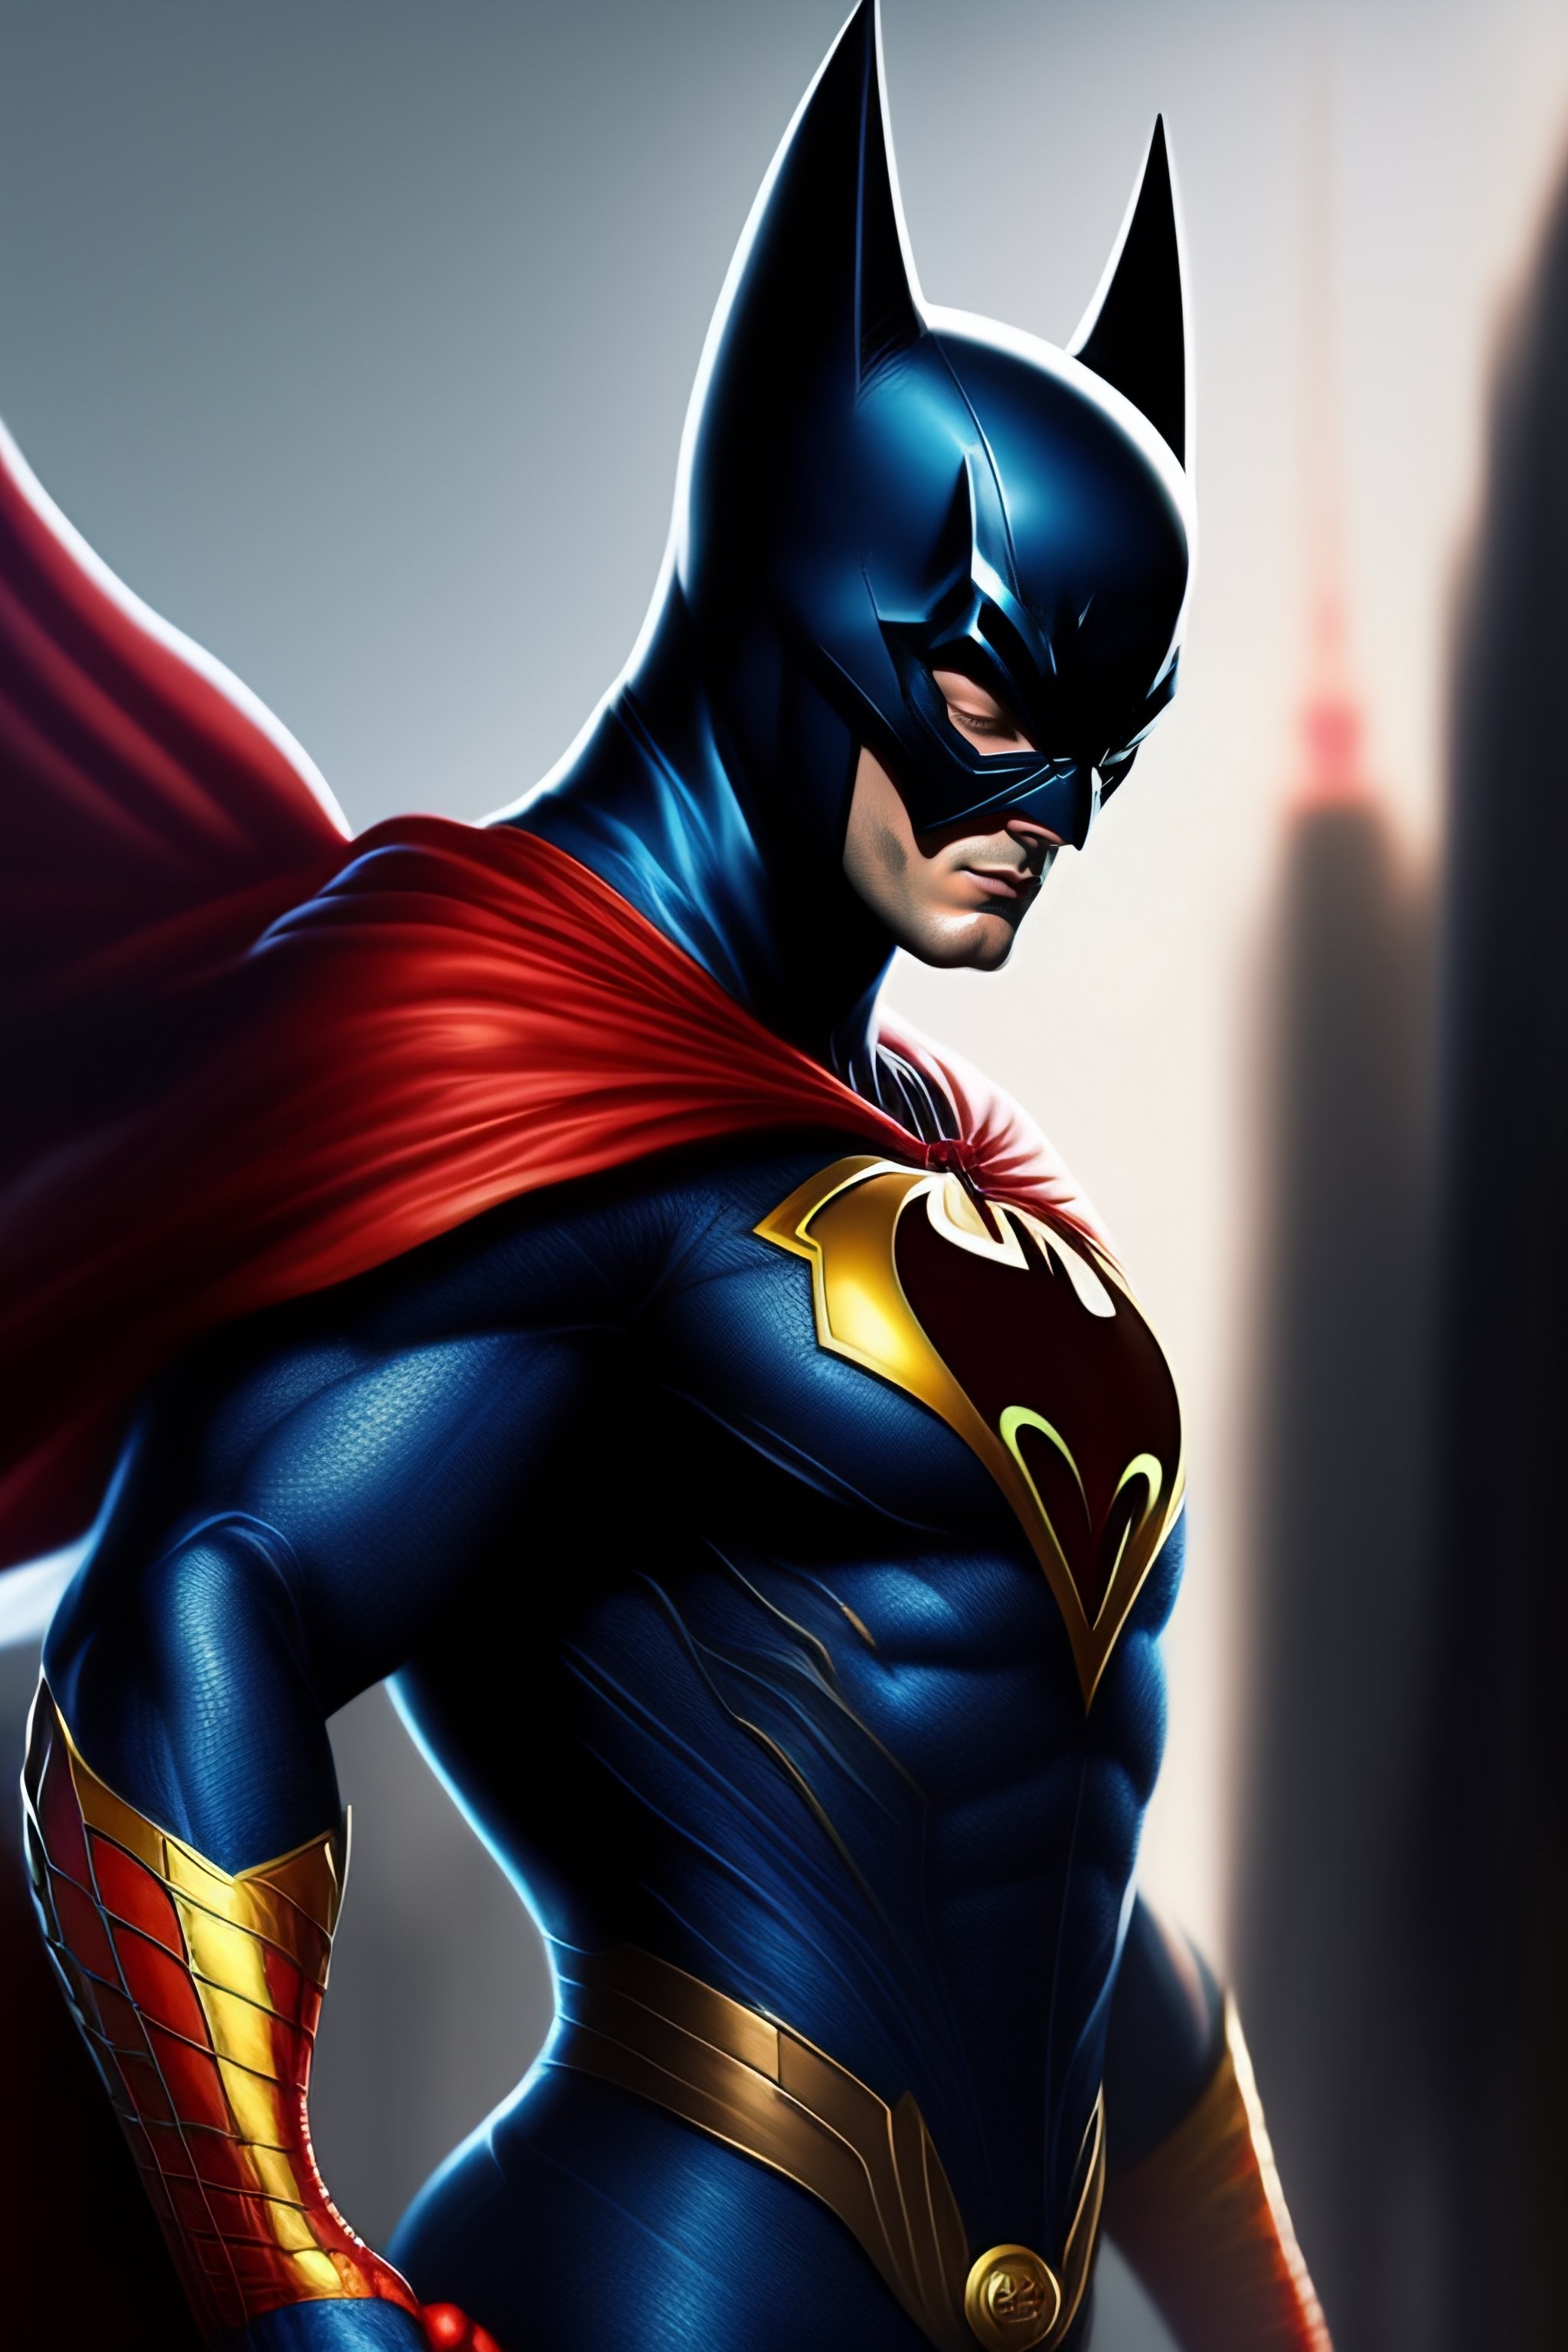 Lexica - Fusion of spiderman and batman, digital art